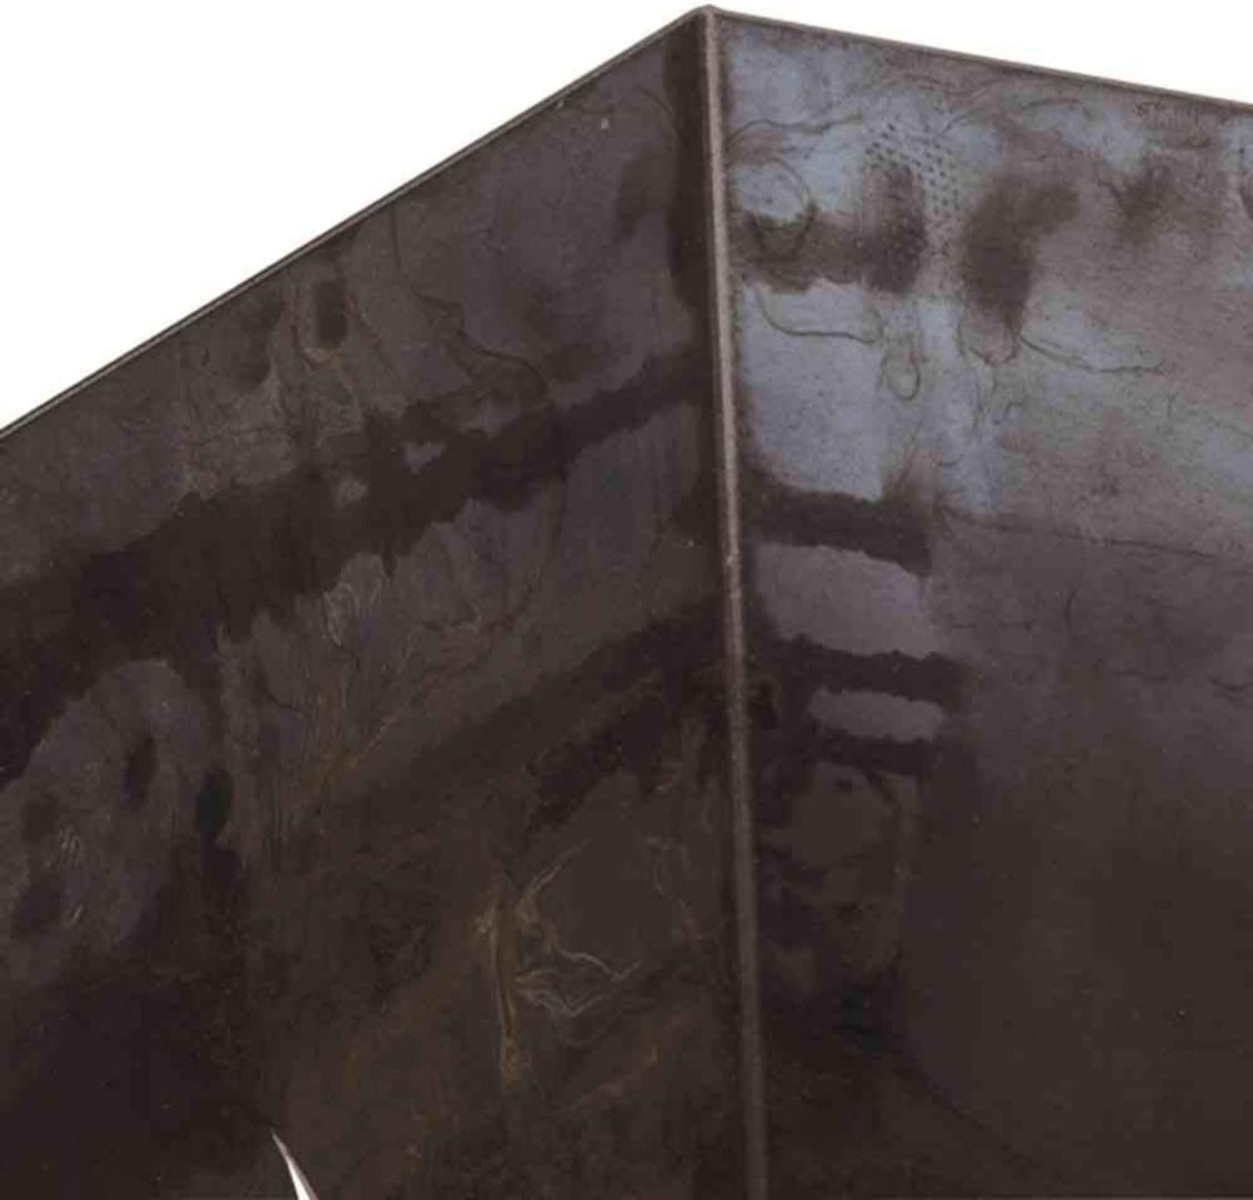 GOMAZING Feuerkorb aus Stahl (anthrazit, grau Feuertonne, 50x50x60cm)